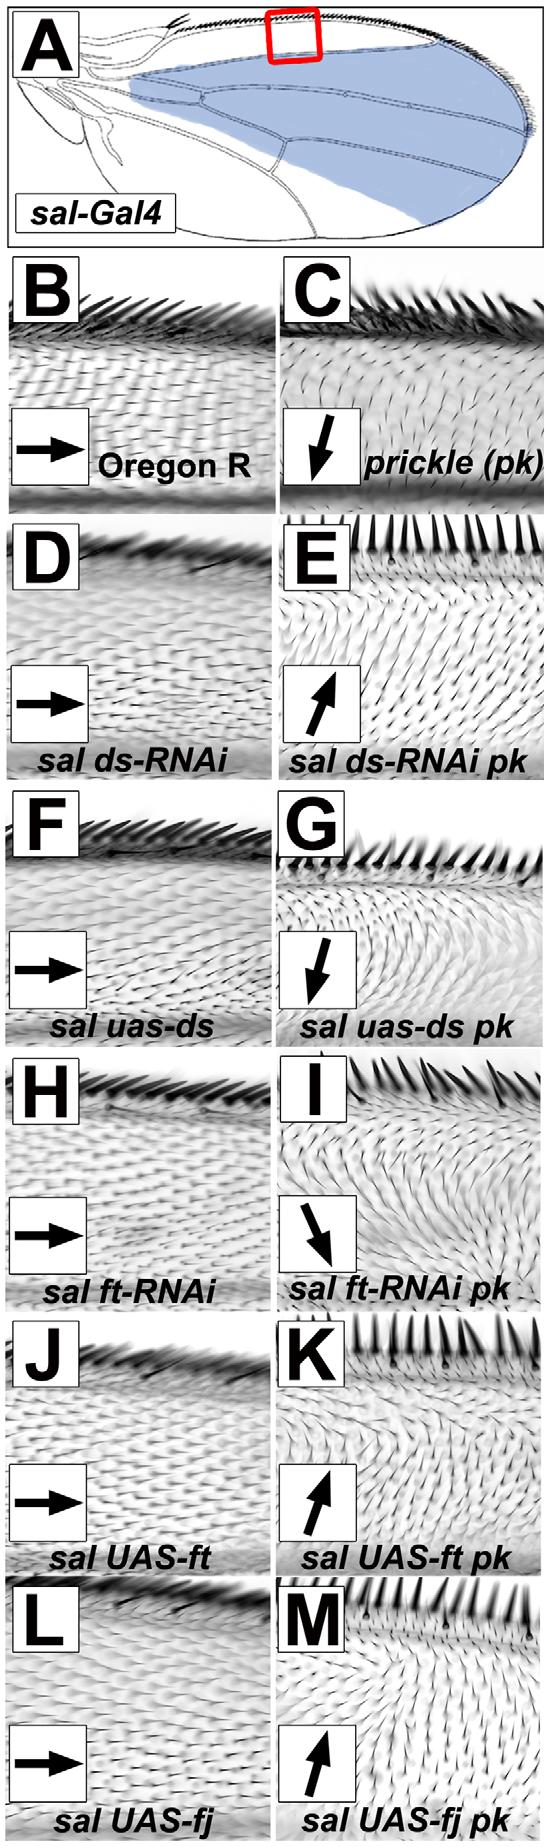 Figure 7. Gradients/boundaries of Ft/Ds pathway gene expression modify the pk pk hair polarity phenotype.